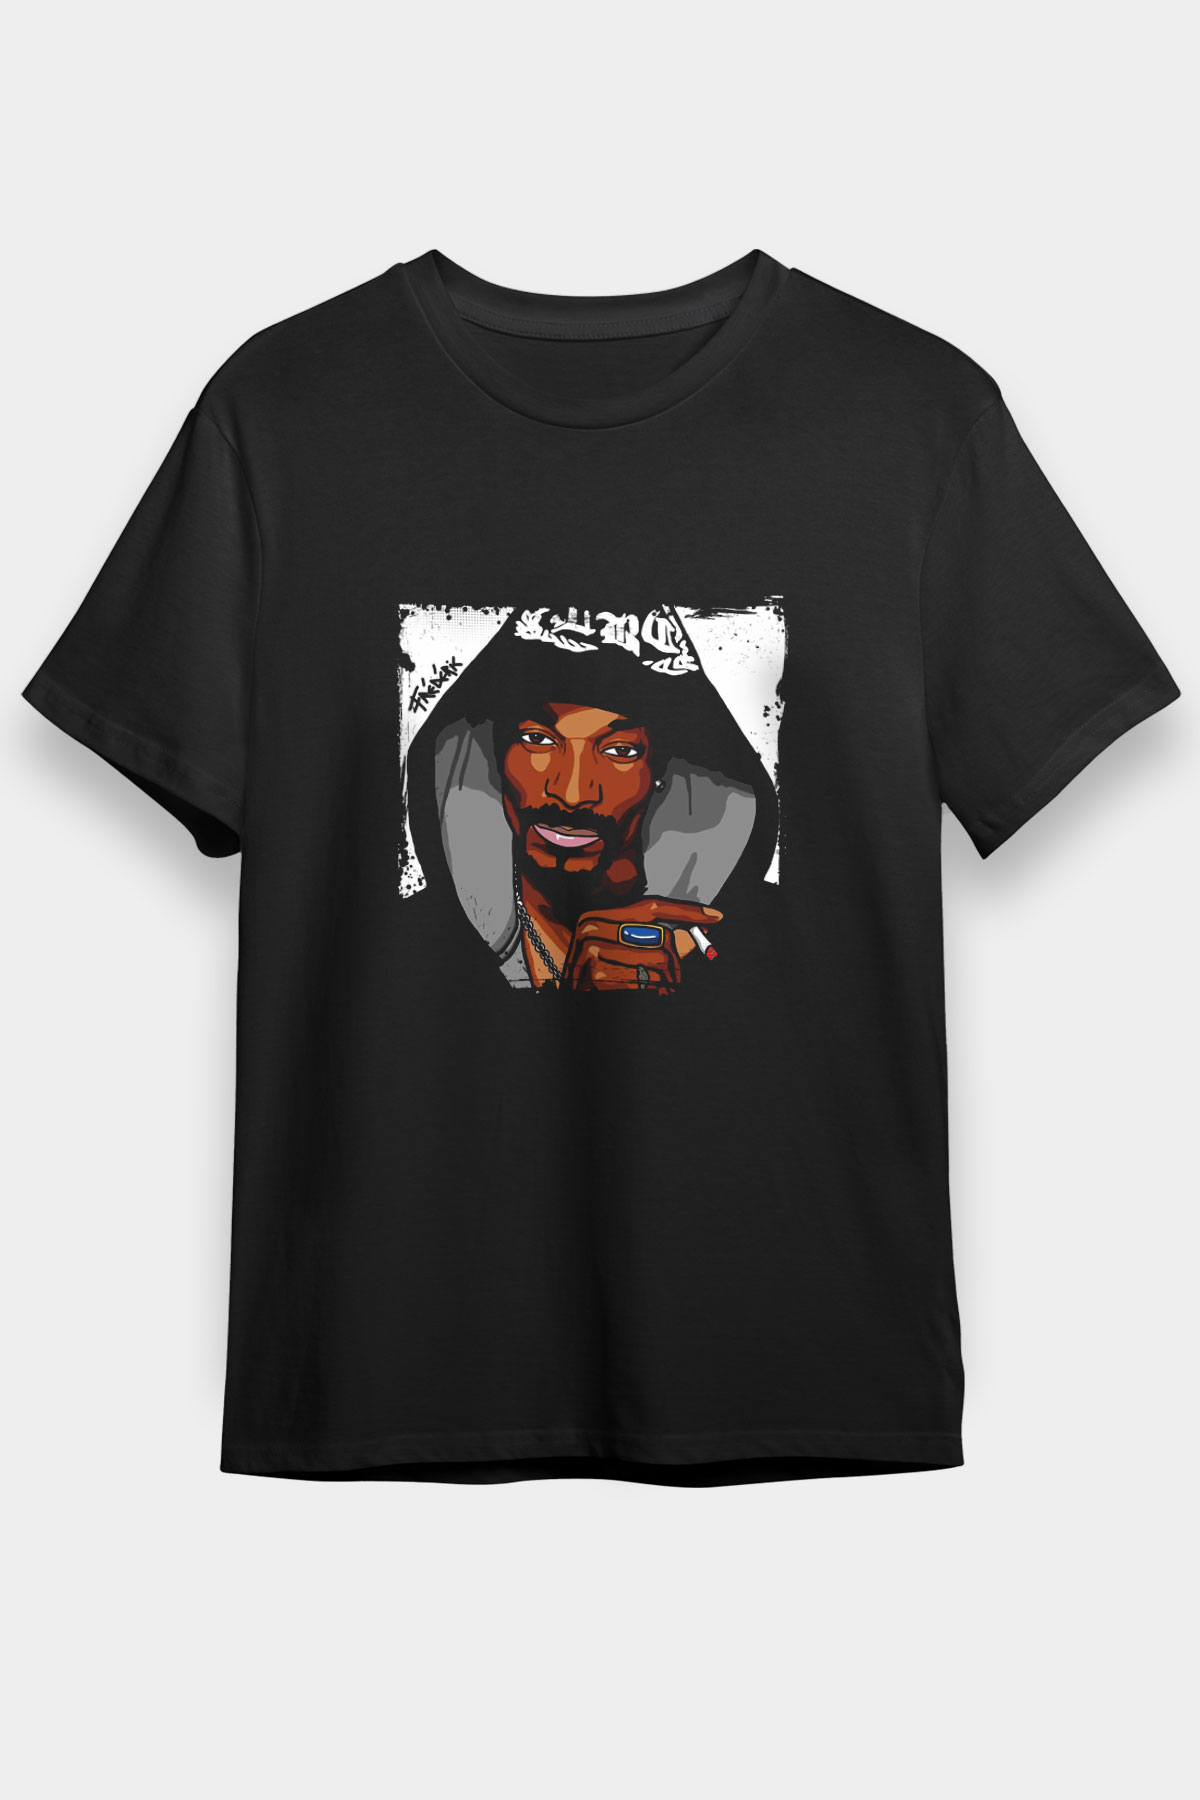 Snoop Dogg T shirt,Hip Hop,Rap Tshirt 13